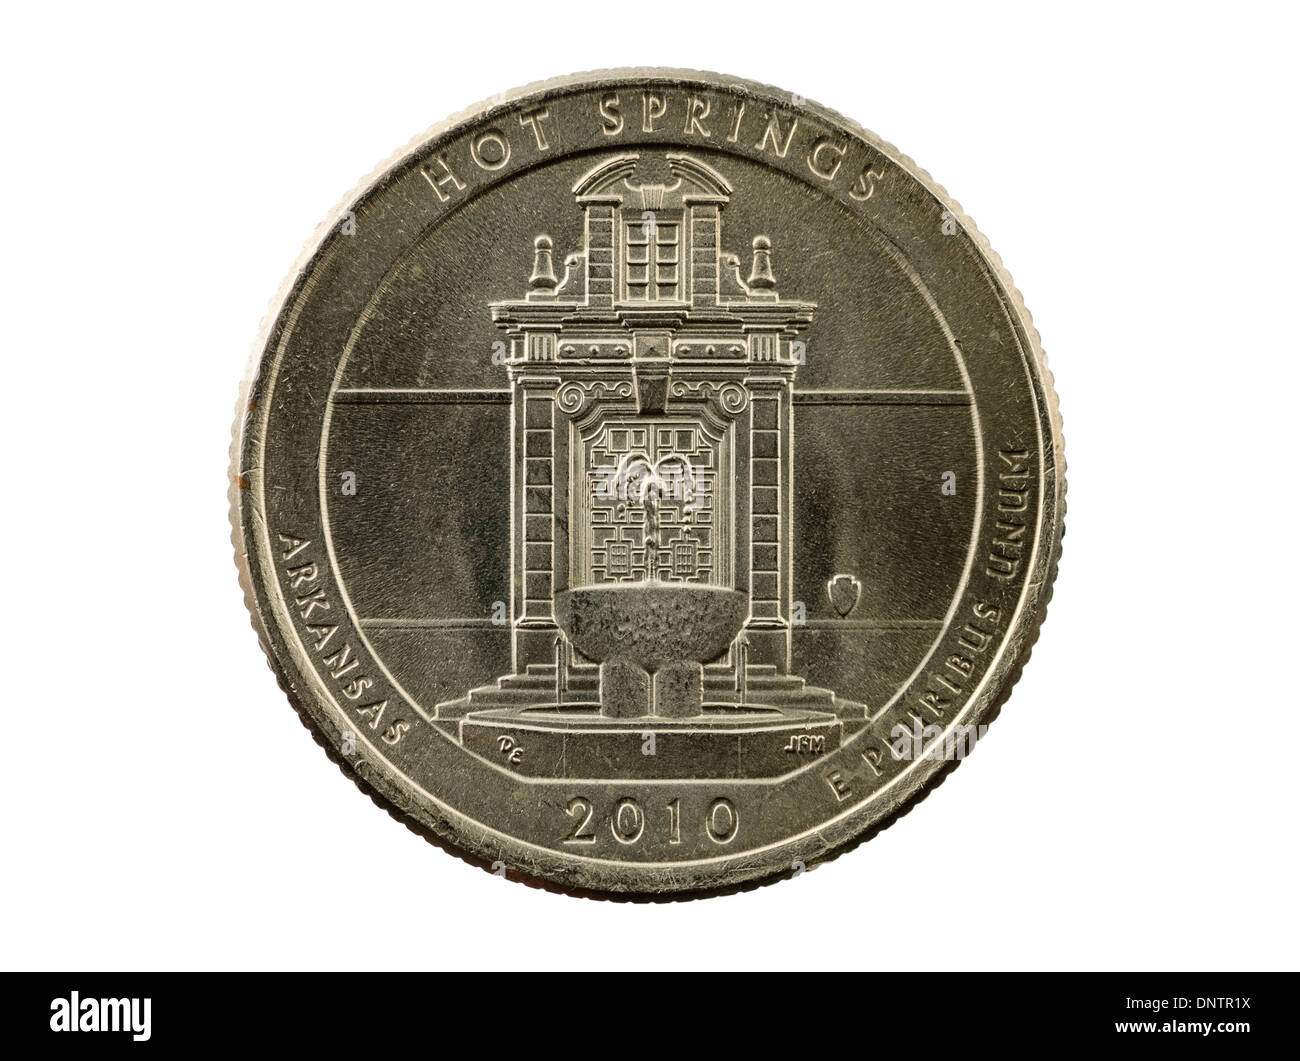 Hot Springs Arkansas commemorative quarter coin isolated on white Stock Photo